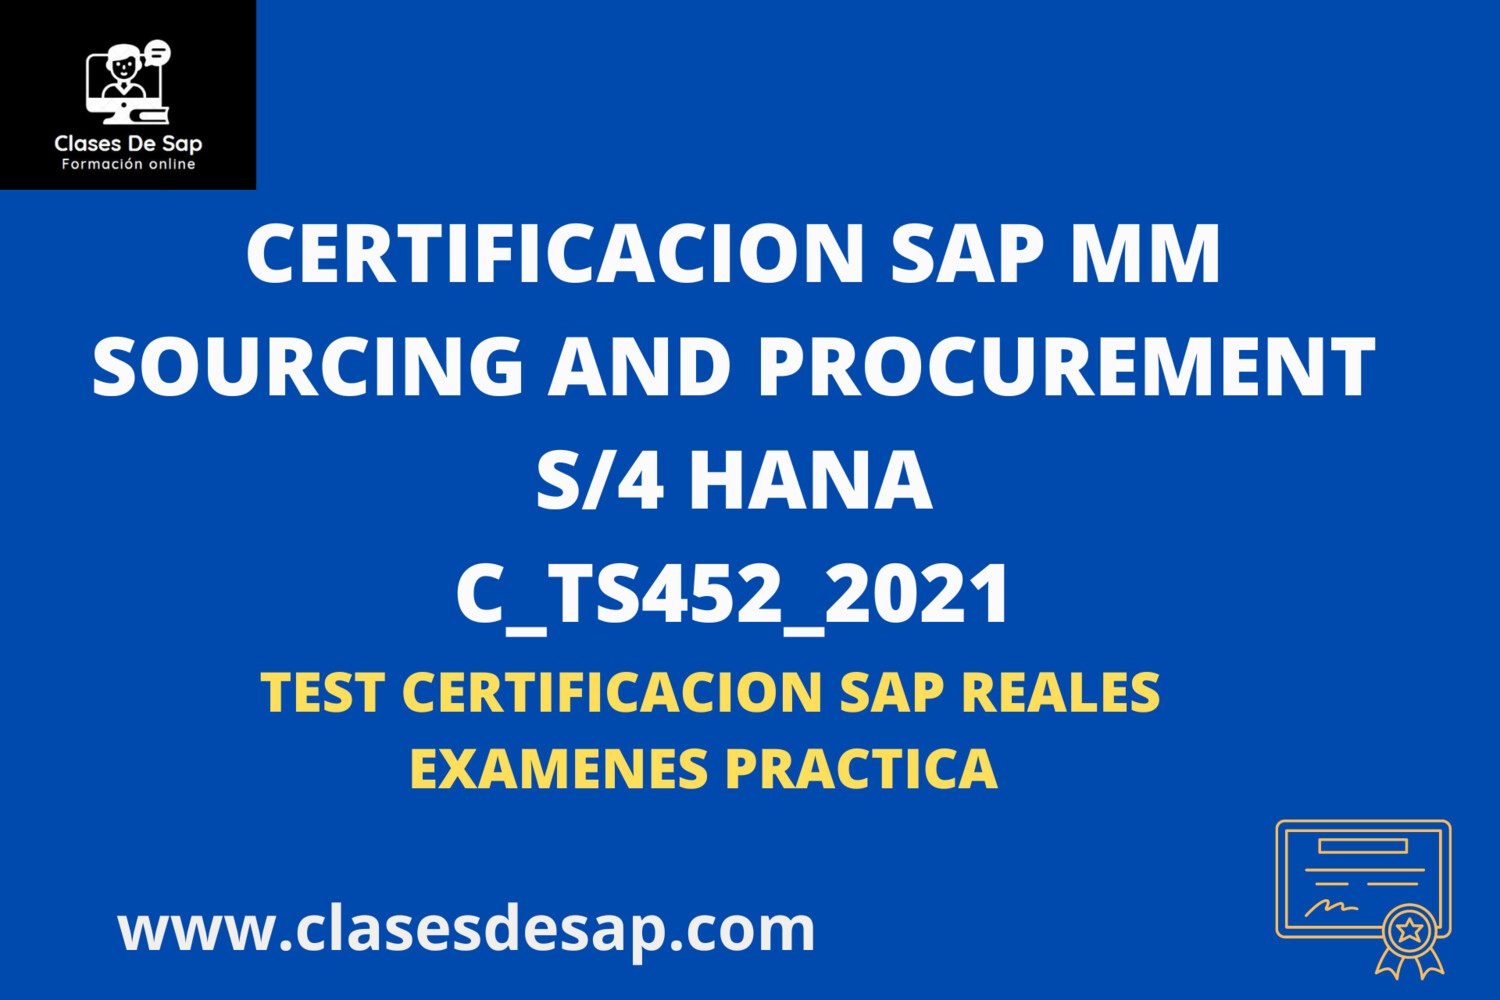 TEST CERTIFICACION SAP MM S/4 HANA C_TS452_2021